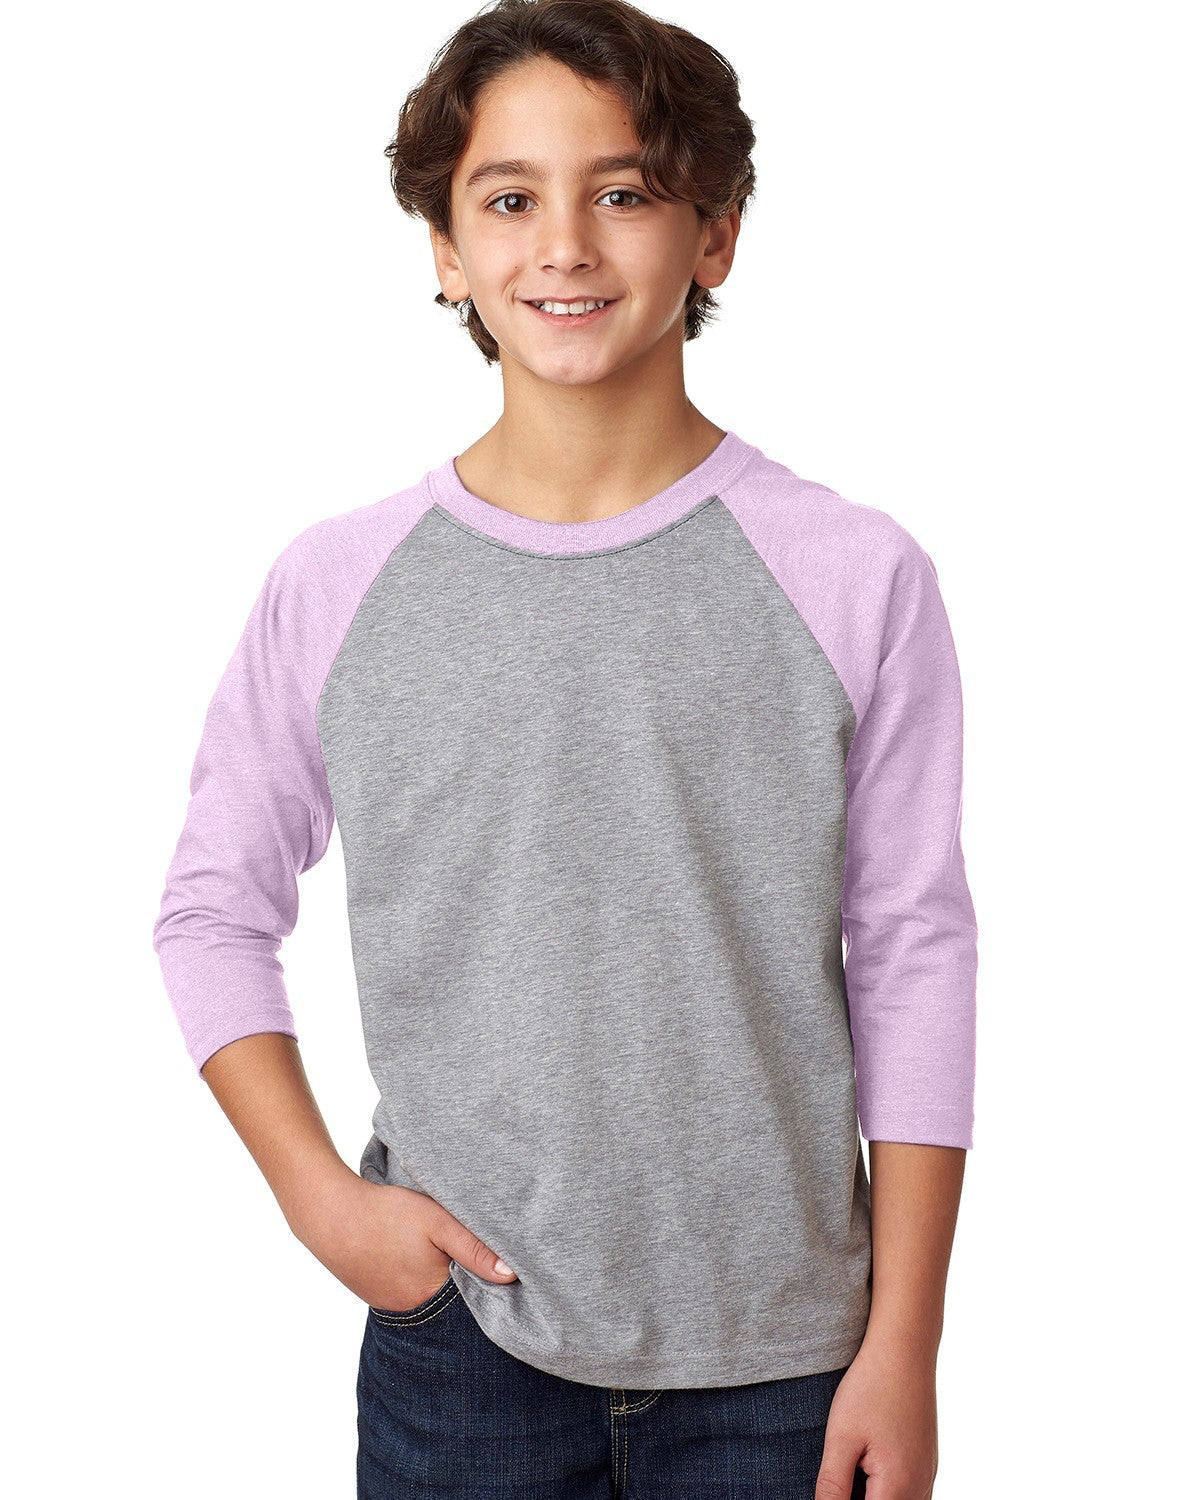 child model wearing next level youth 3/4 sleeve raglan tee in lilac dark heather grey